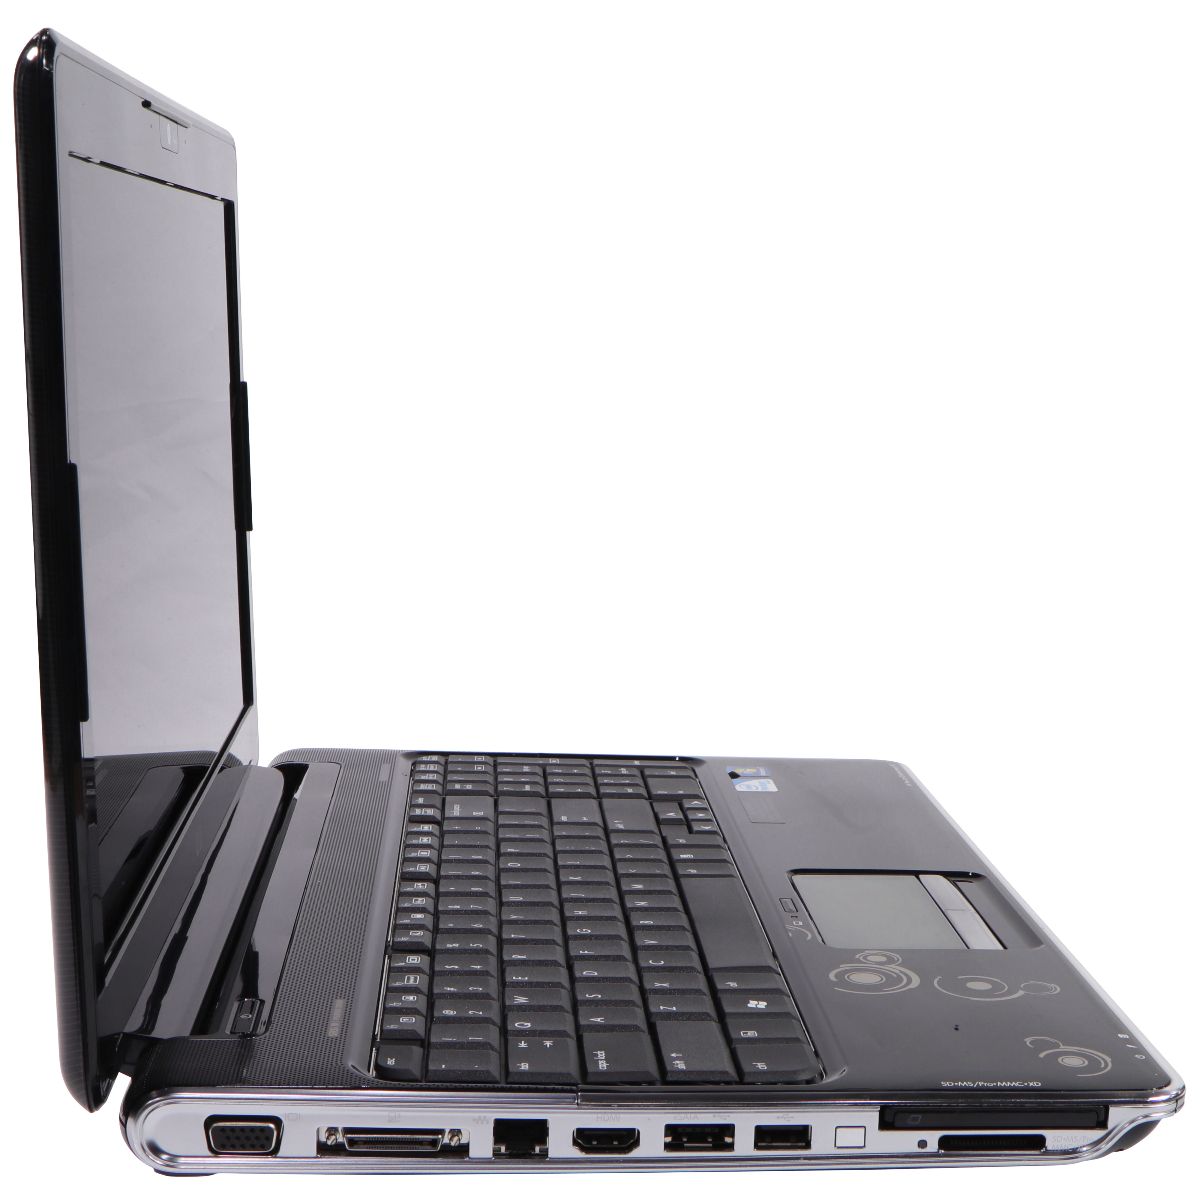 HP Pavilion (15.6-in) Laptop (DV6-2141ee) i5-430M/500GB/4GB/10 Home - Black Laptops - PC Laptops & Netbooks HP    - Simple Cell Bulk Wholesale Pricing - USA Seller